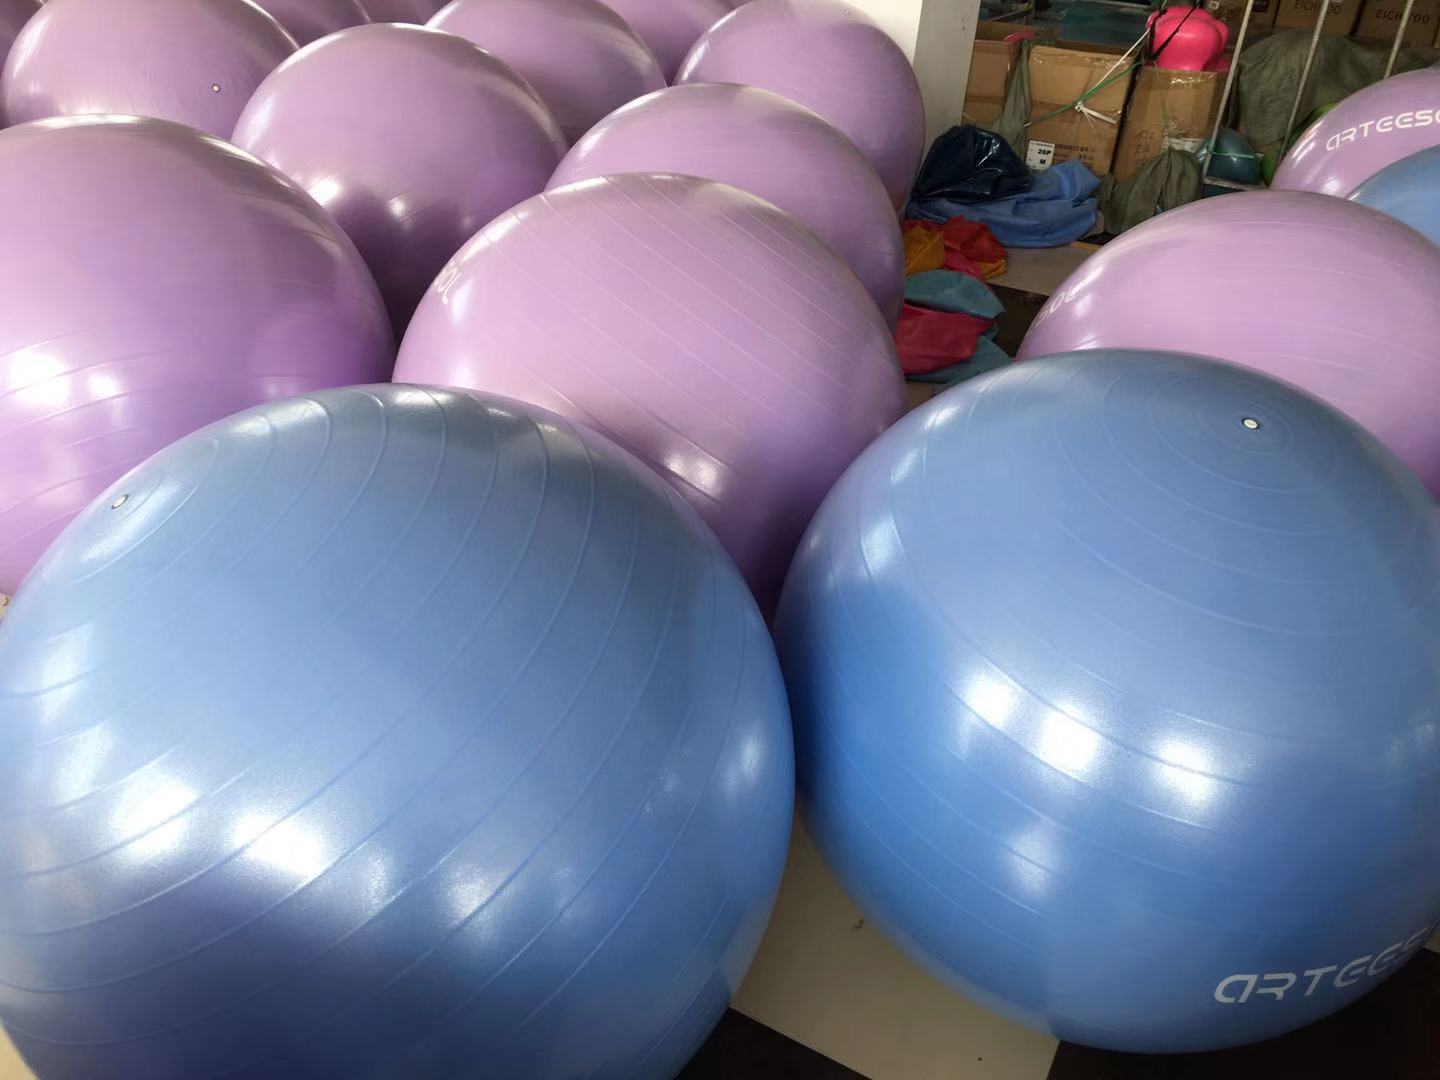 Cloud Yoga Ball pilates Kids Exercise Balls Fitness Pilates